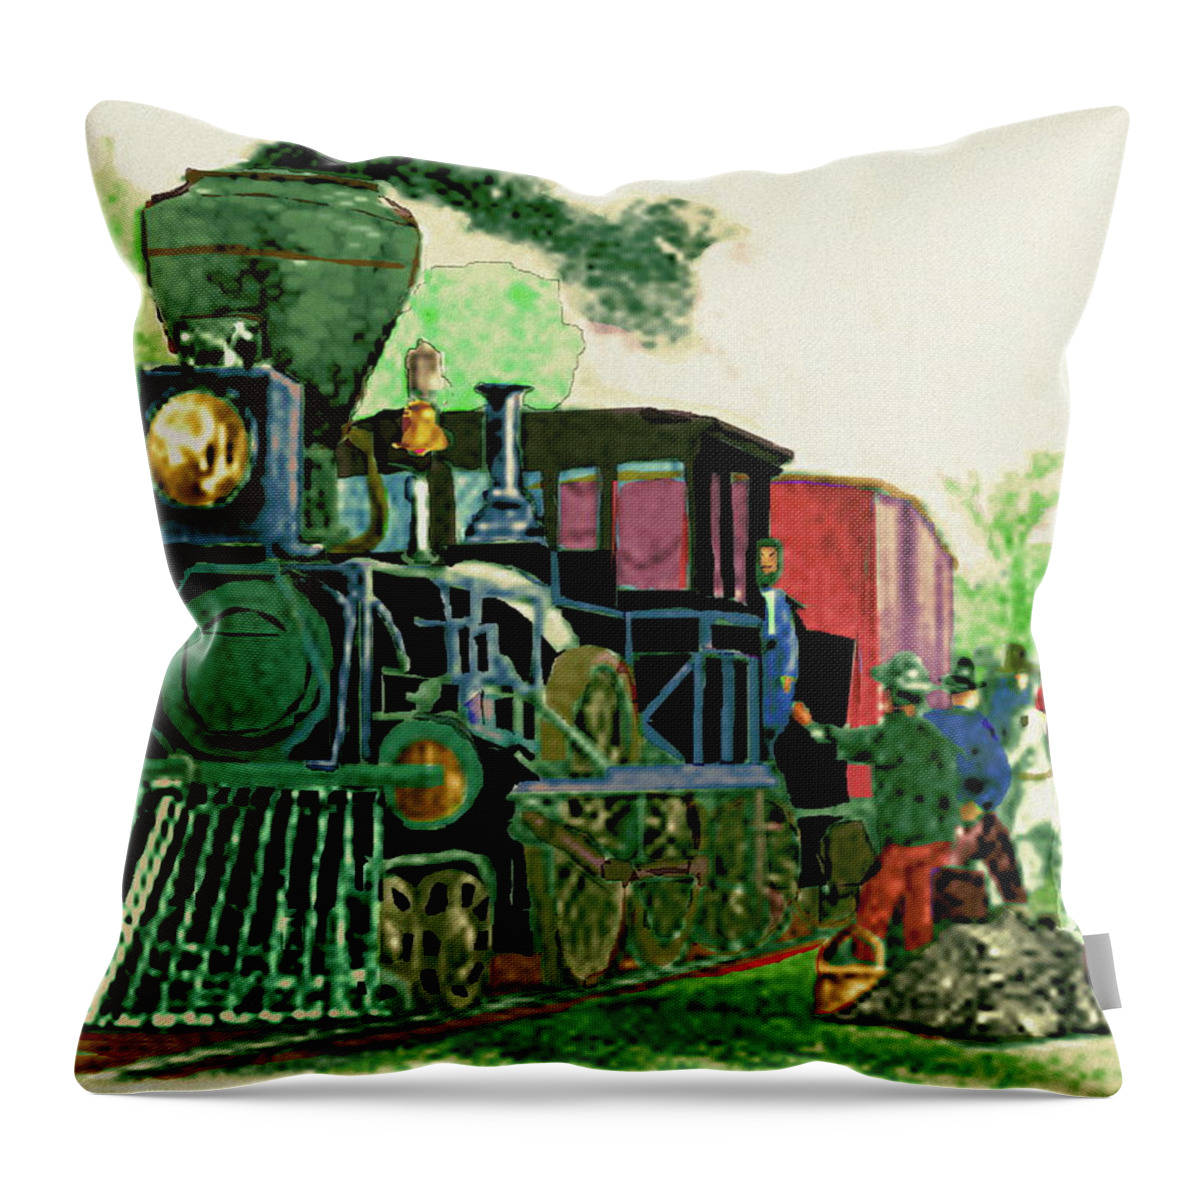 Ashland Throw Pillow featuring the digital art Hopkinton Railroad by Cliff Wilson